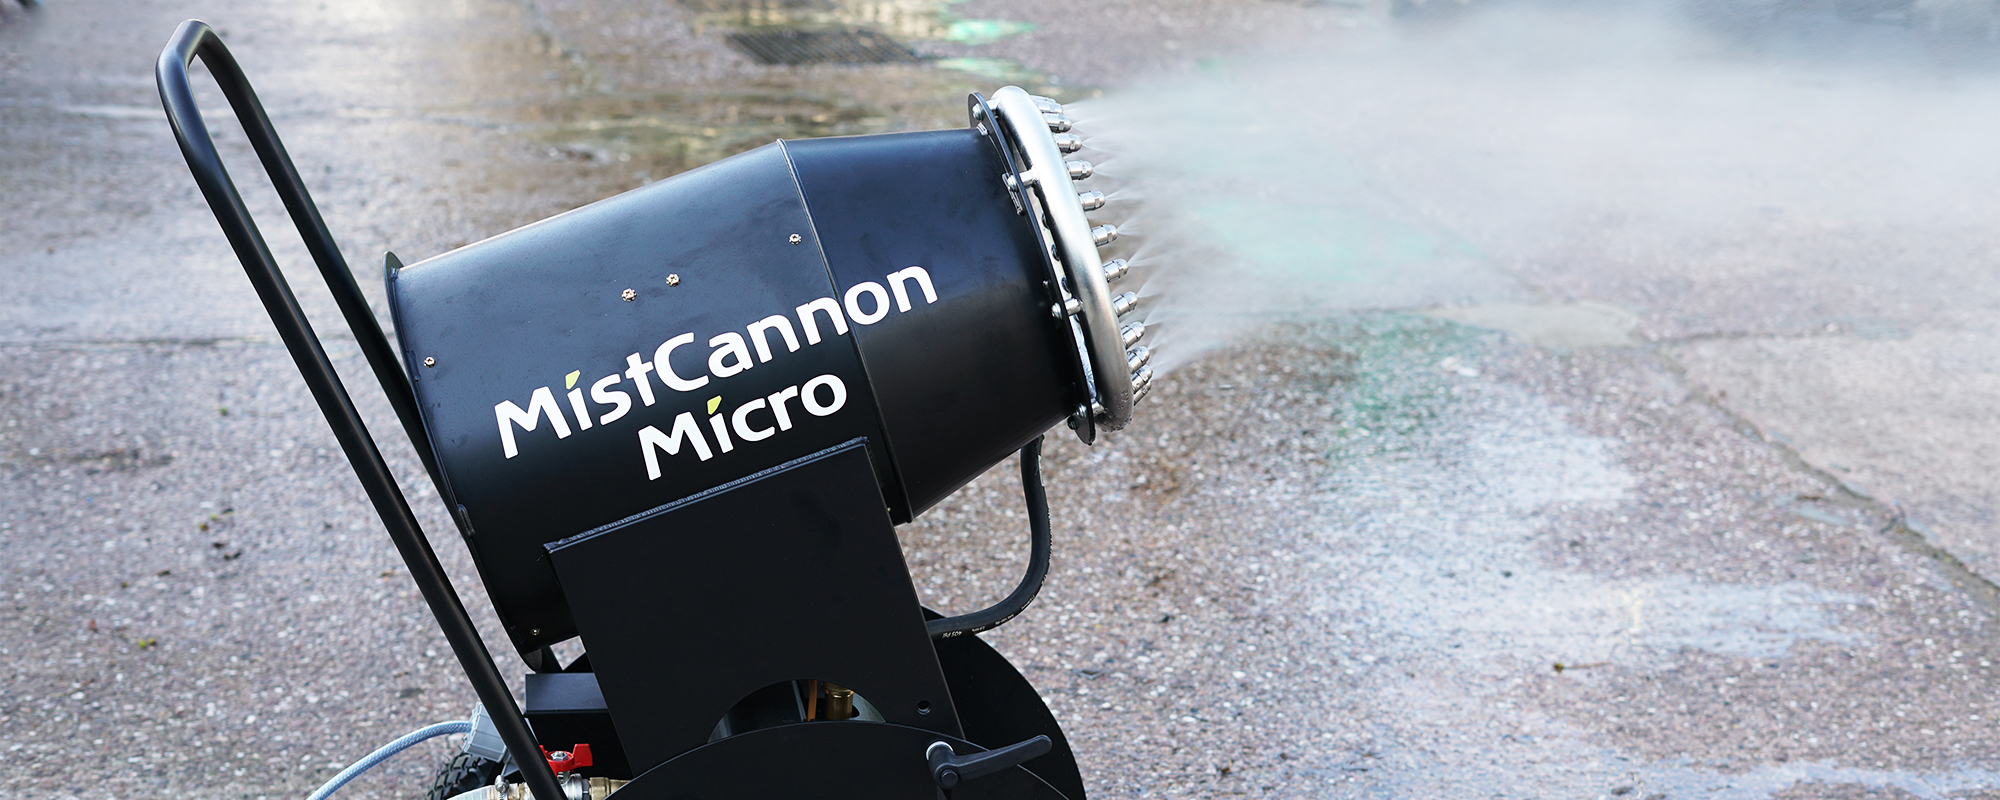 mist-cannon-micro-yard-spraying-side-slider